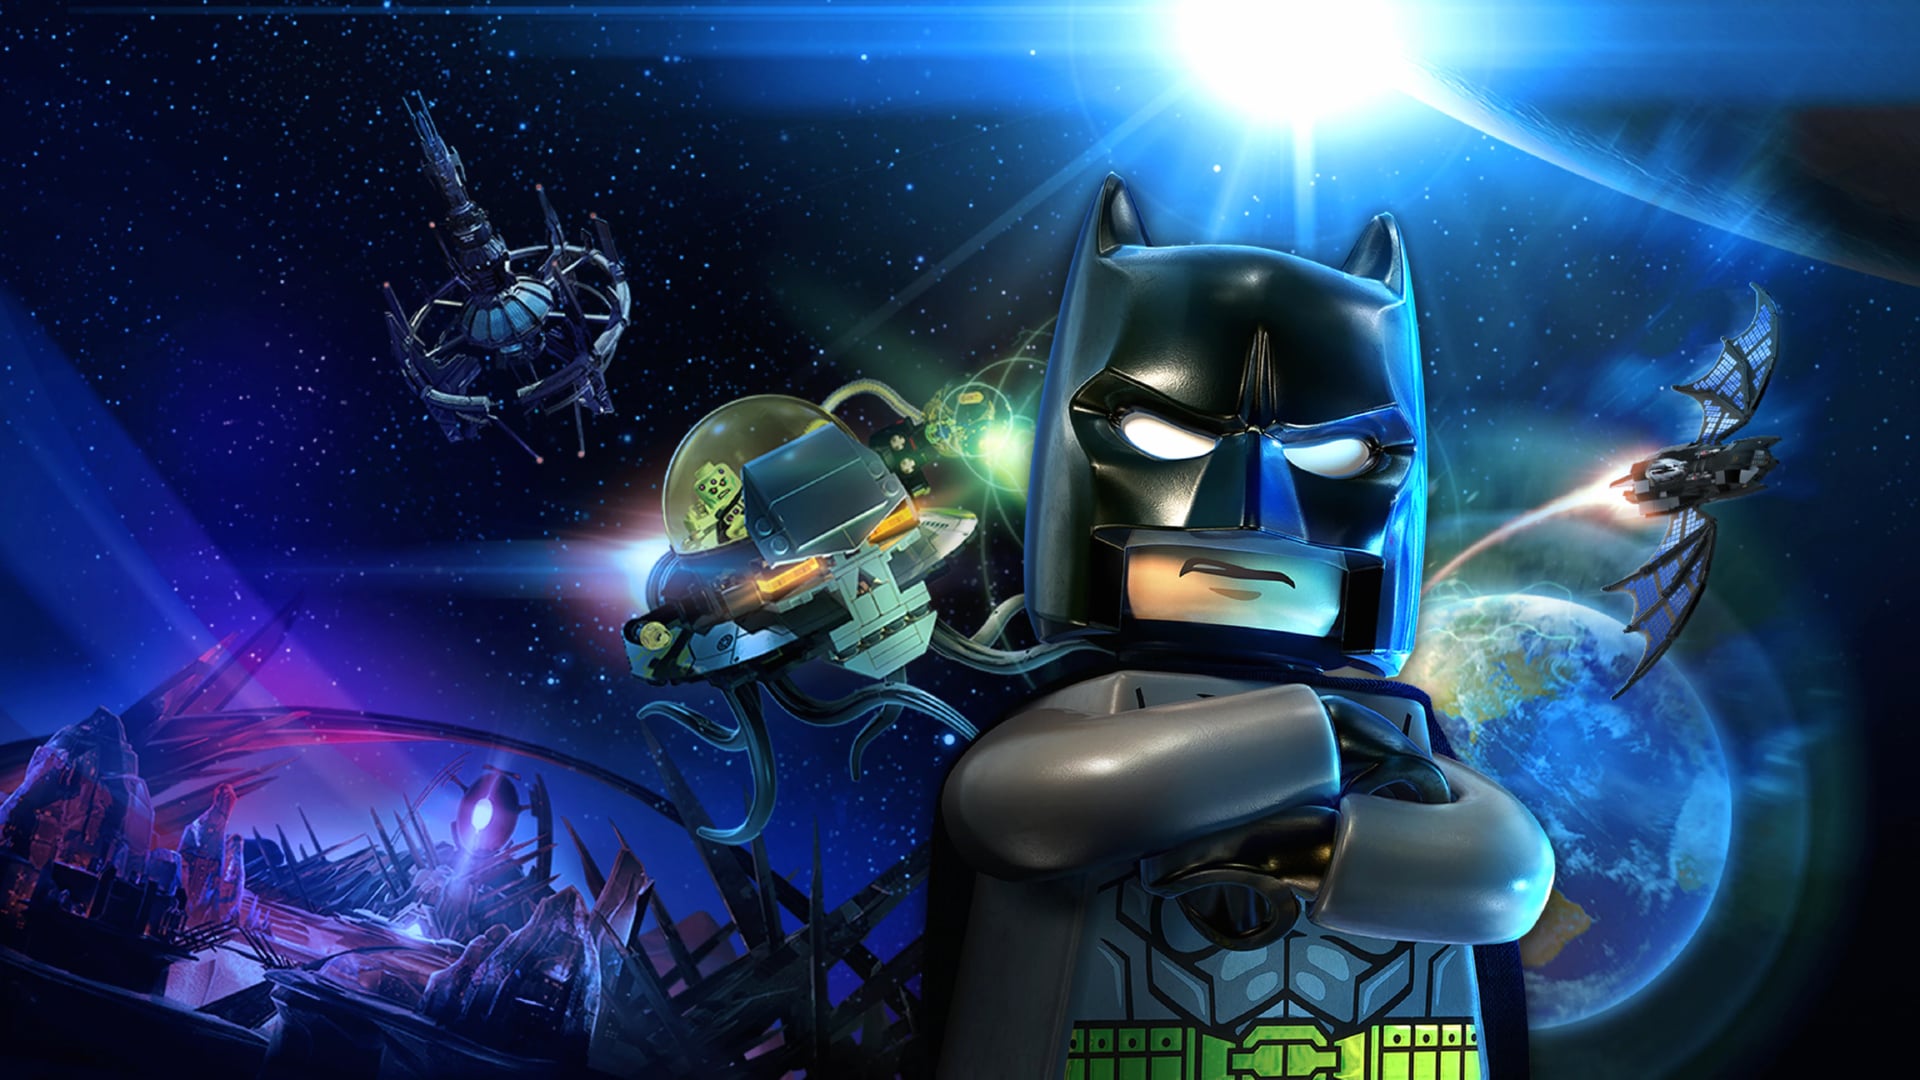 LEGO Batman 3 Beyond Gotham at 1024 x 1024 iPad size wallpapers HD quality